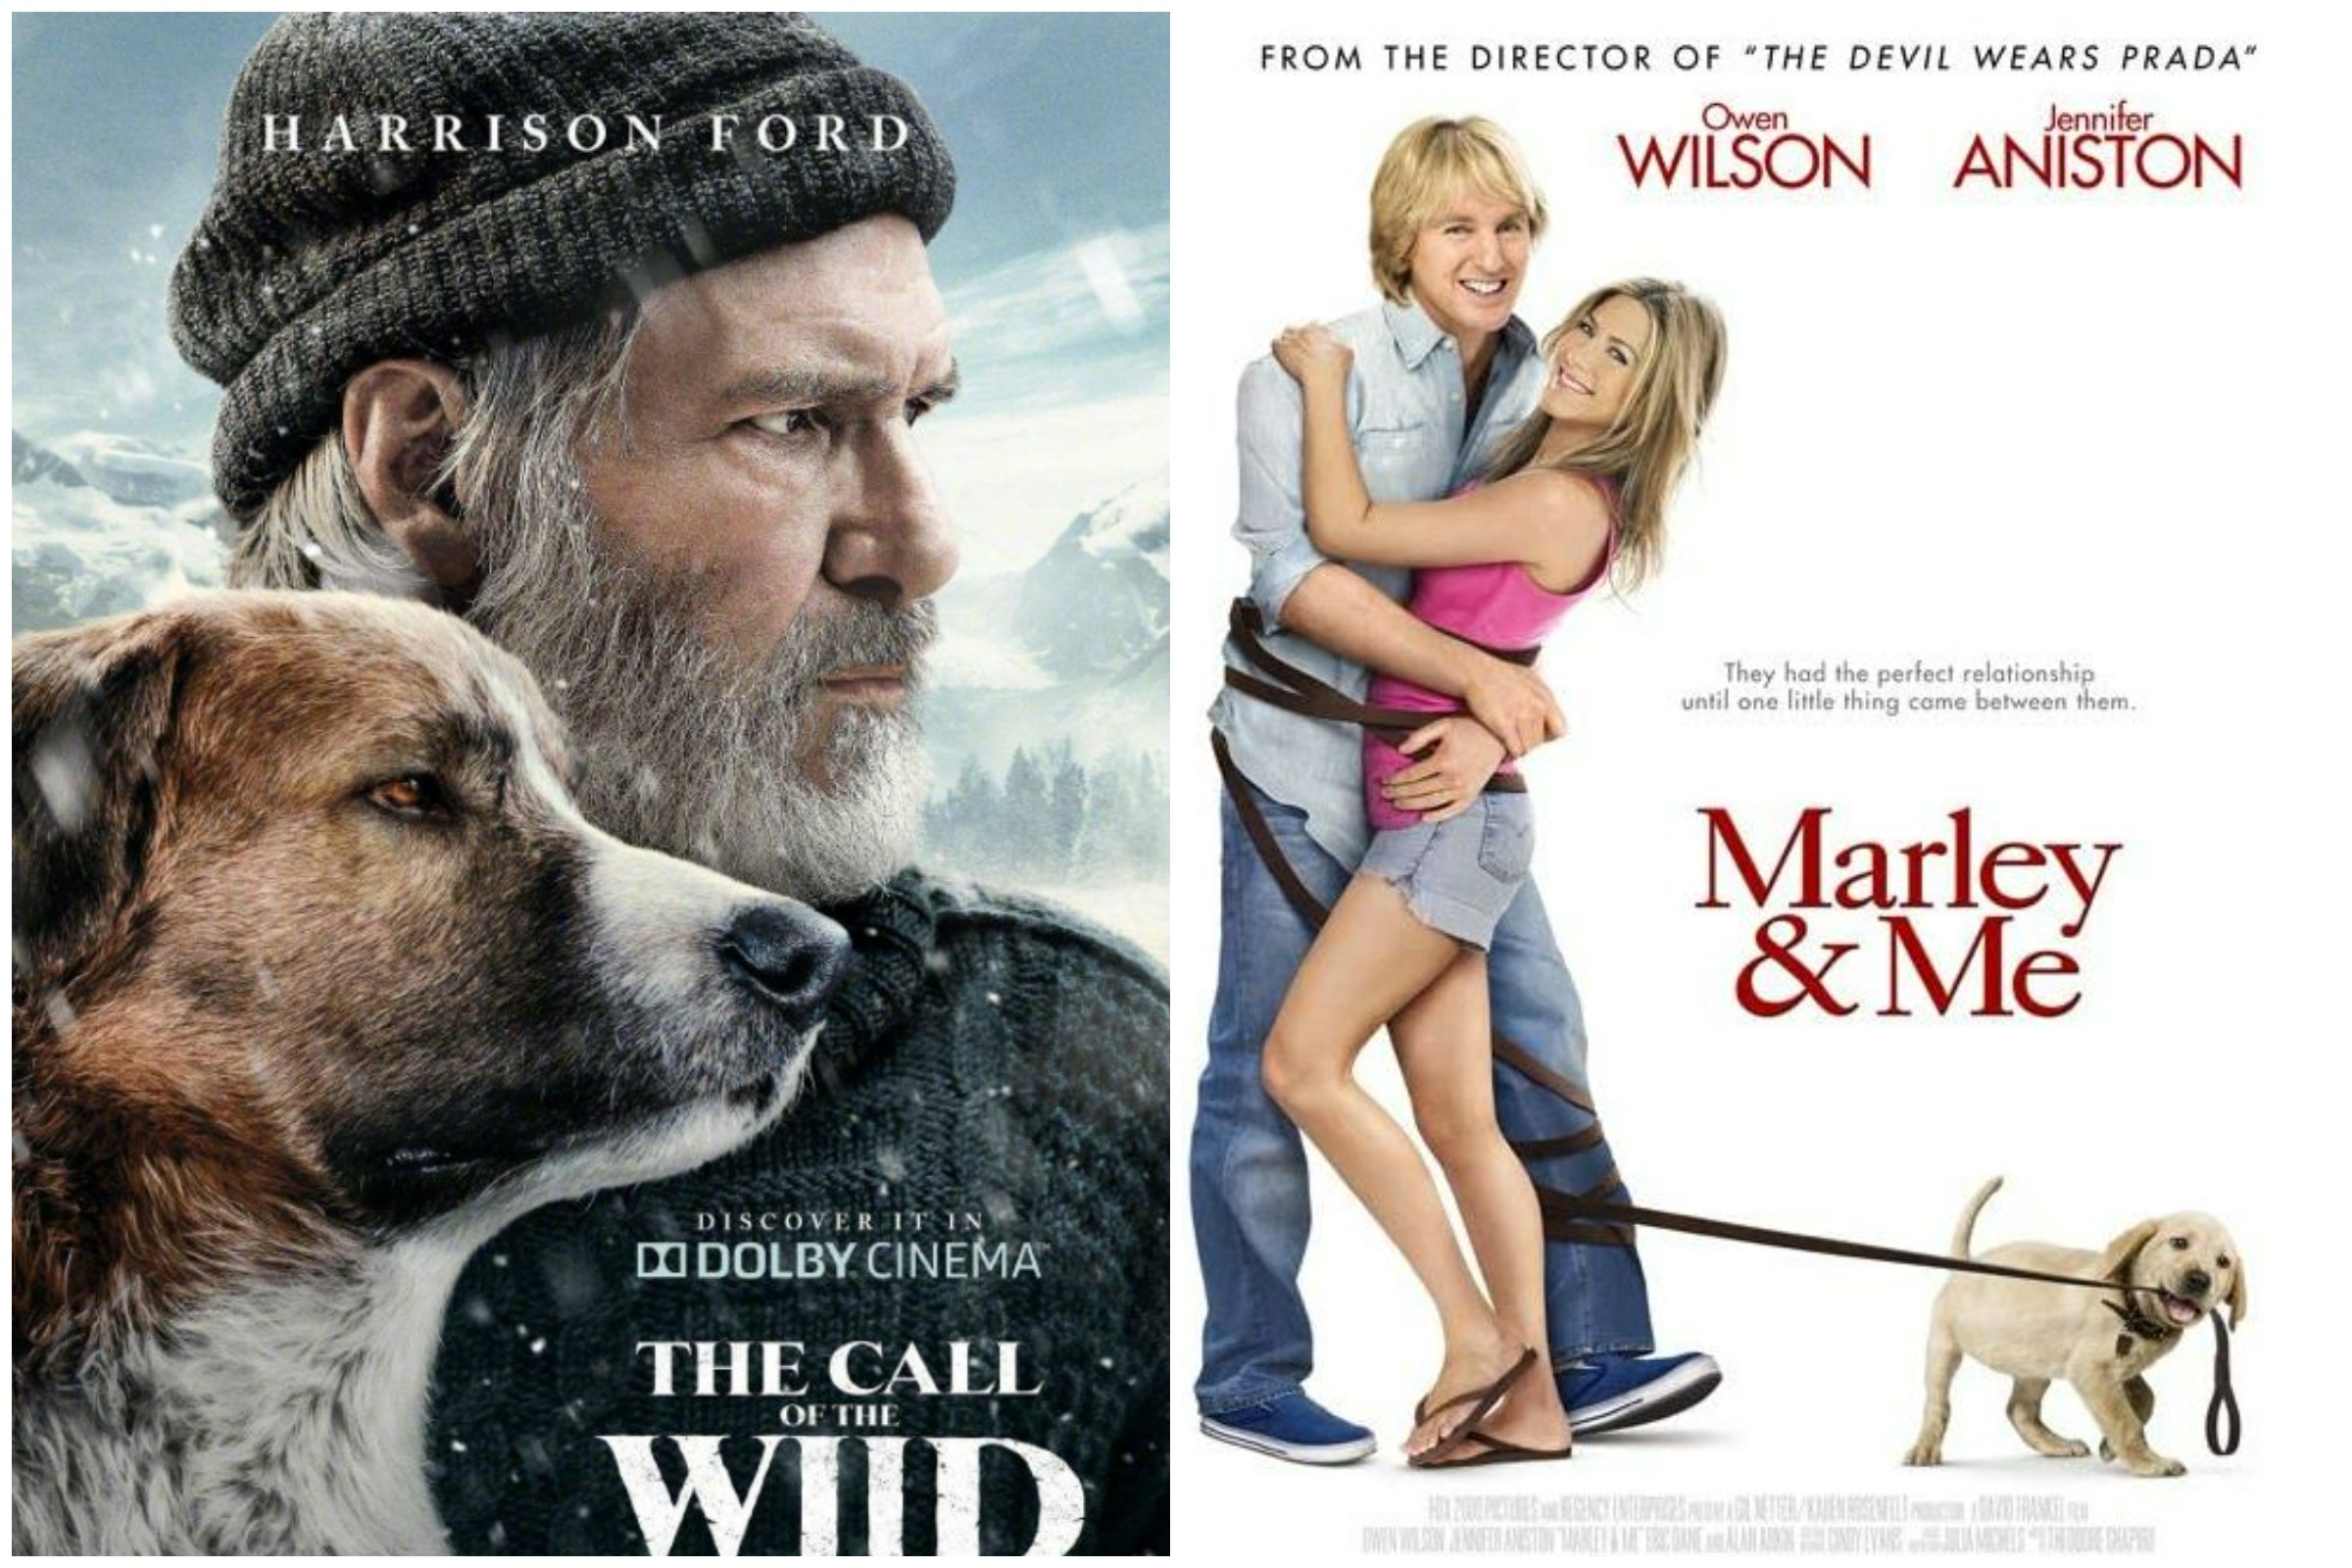 dog movies